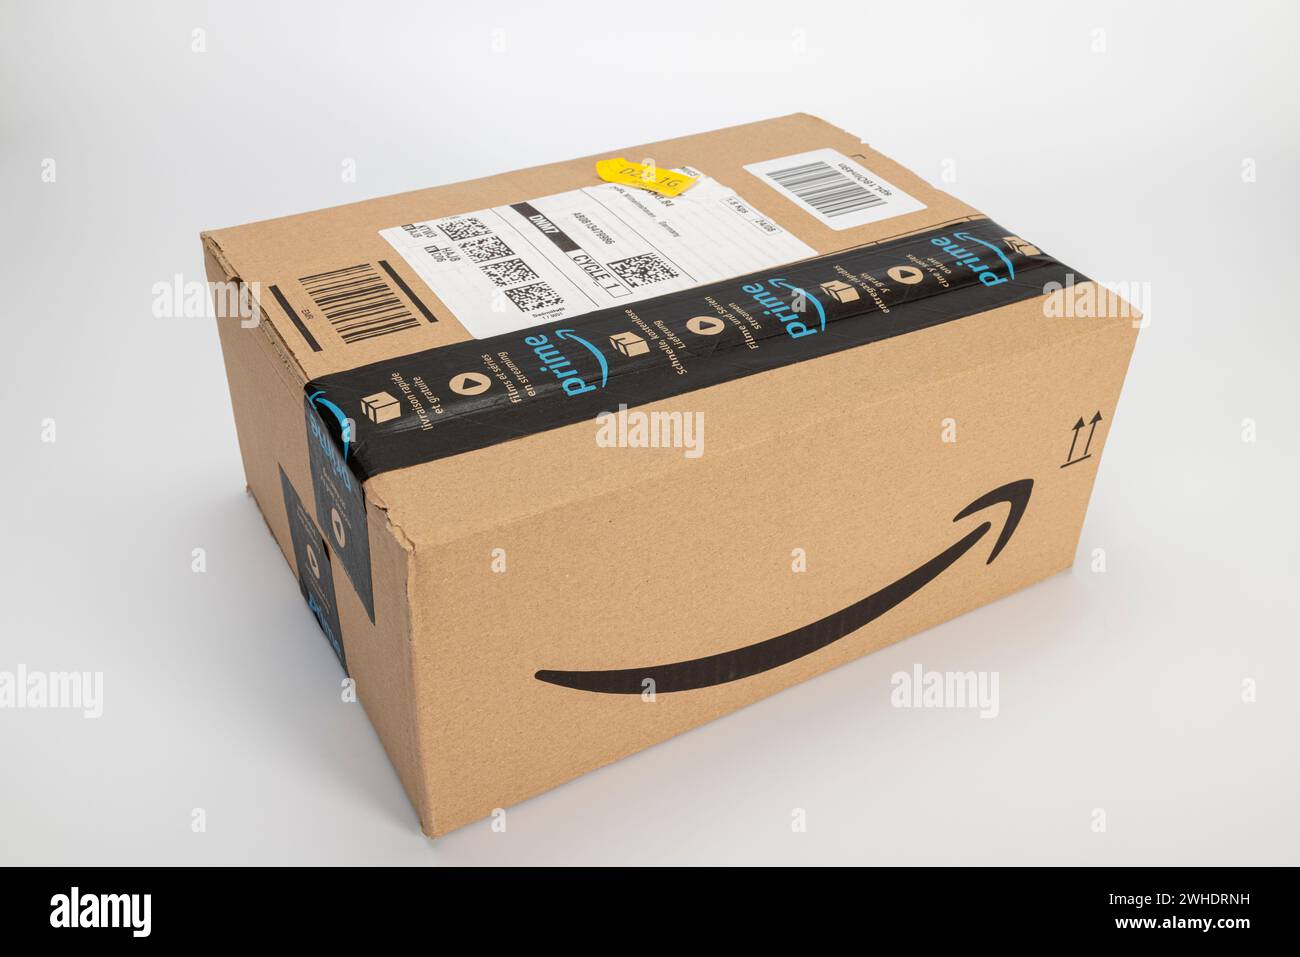 Amazon Prime package, white background, symbol image, Prime membership, Prime shipping benefits, Stock Photo